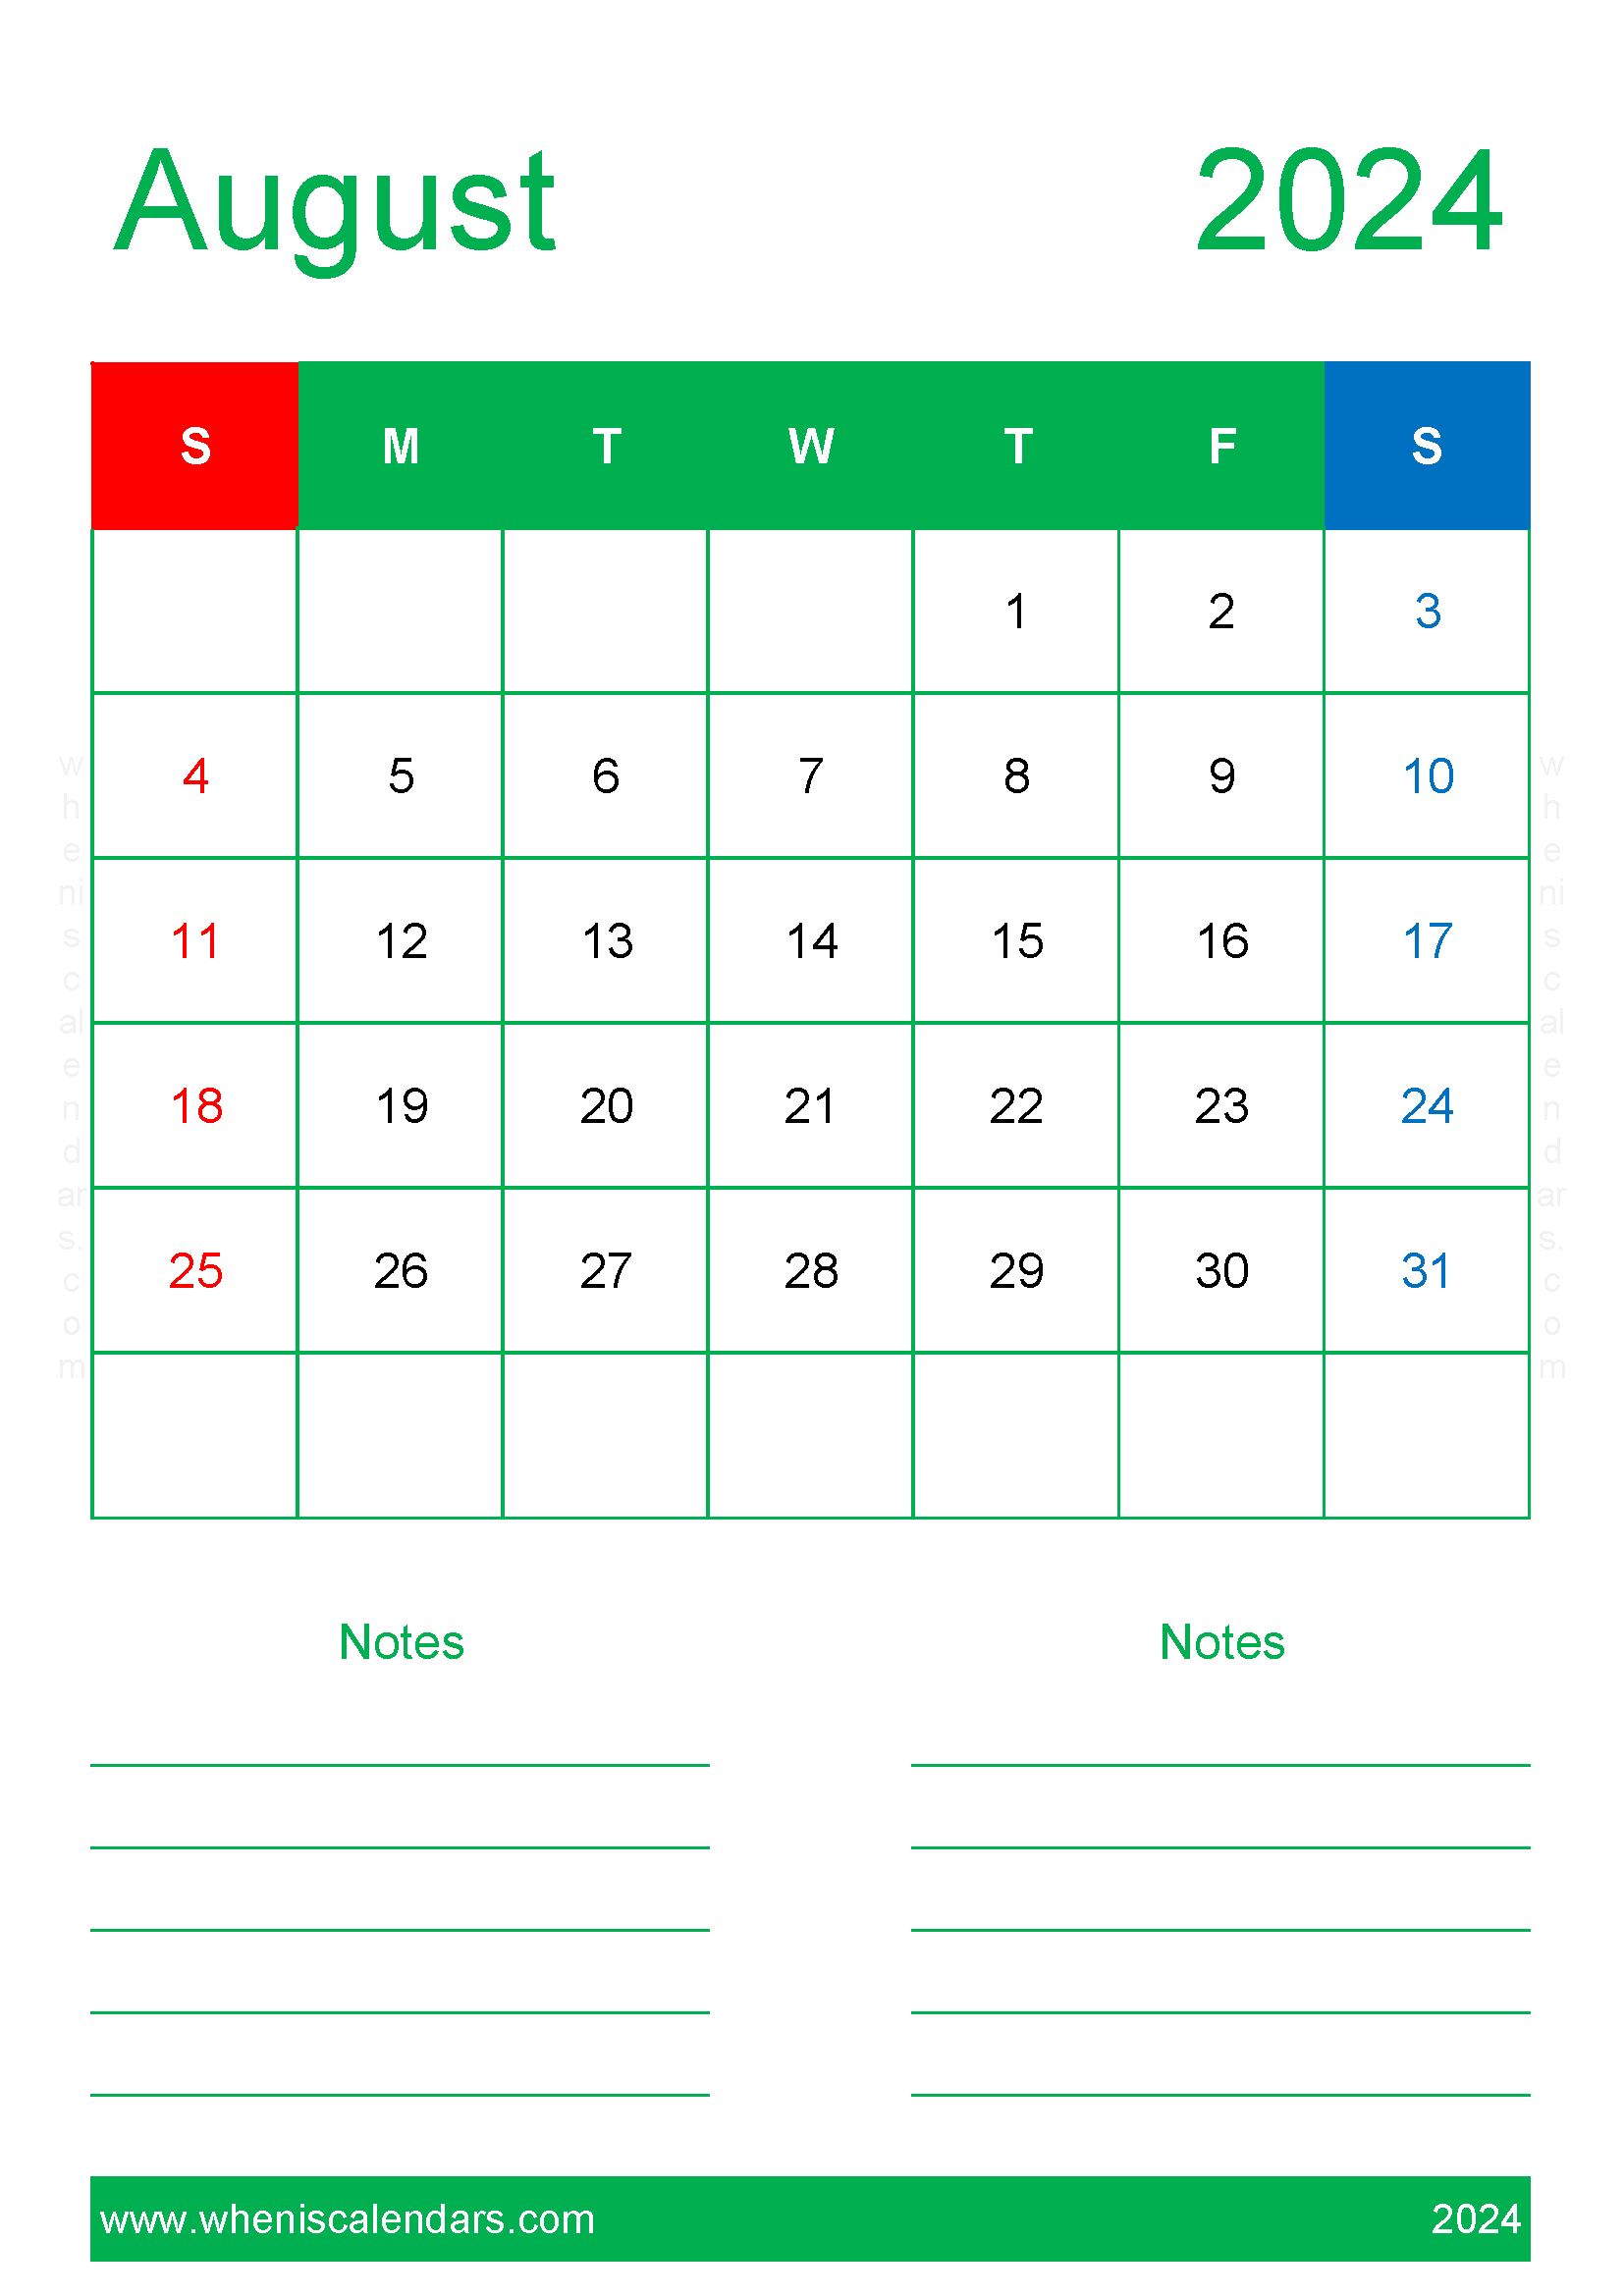 August 2024 planner pdf Monthly Calendar